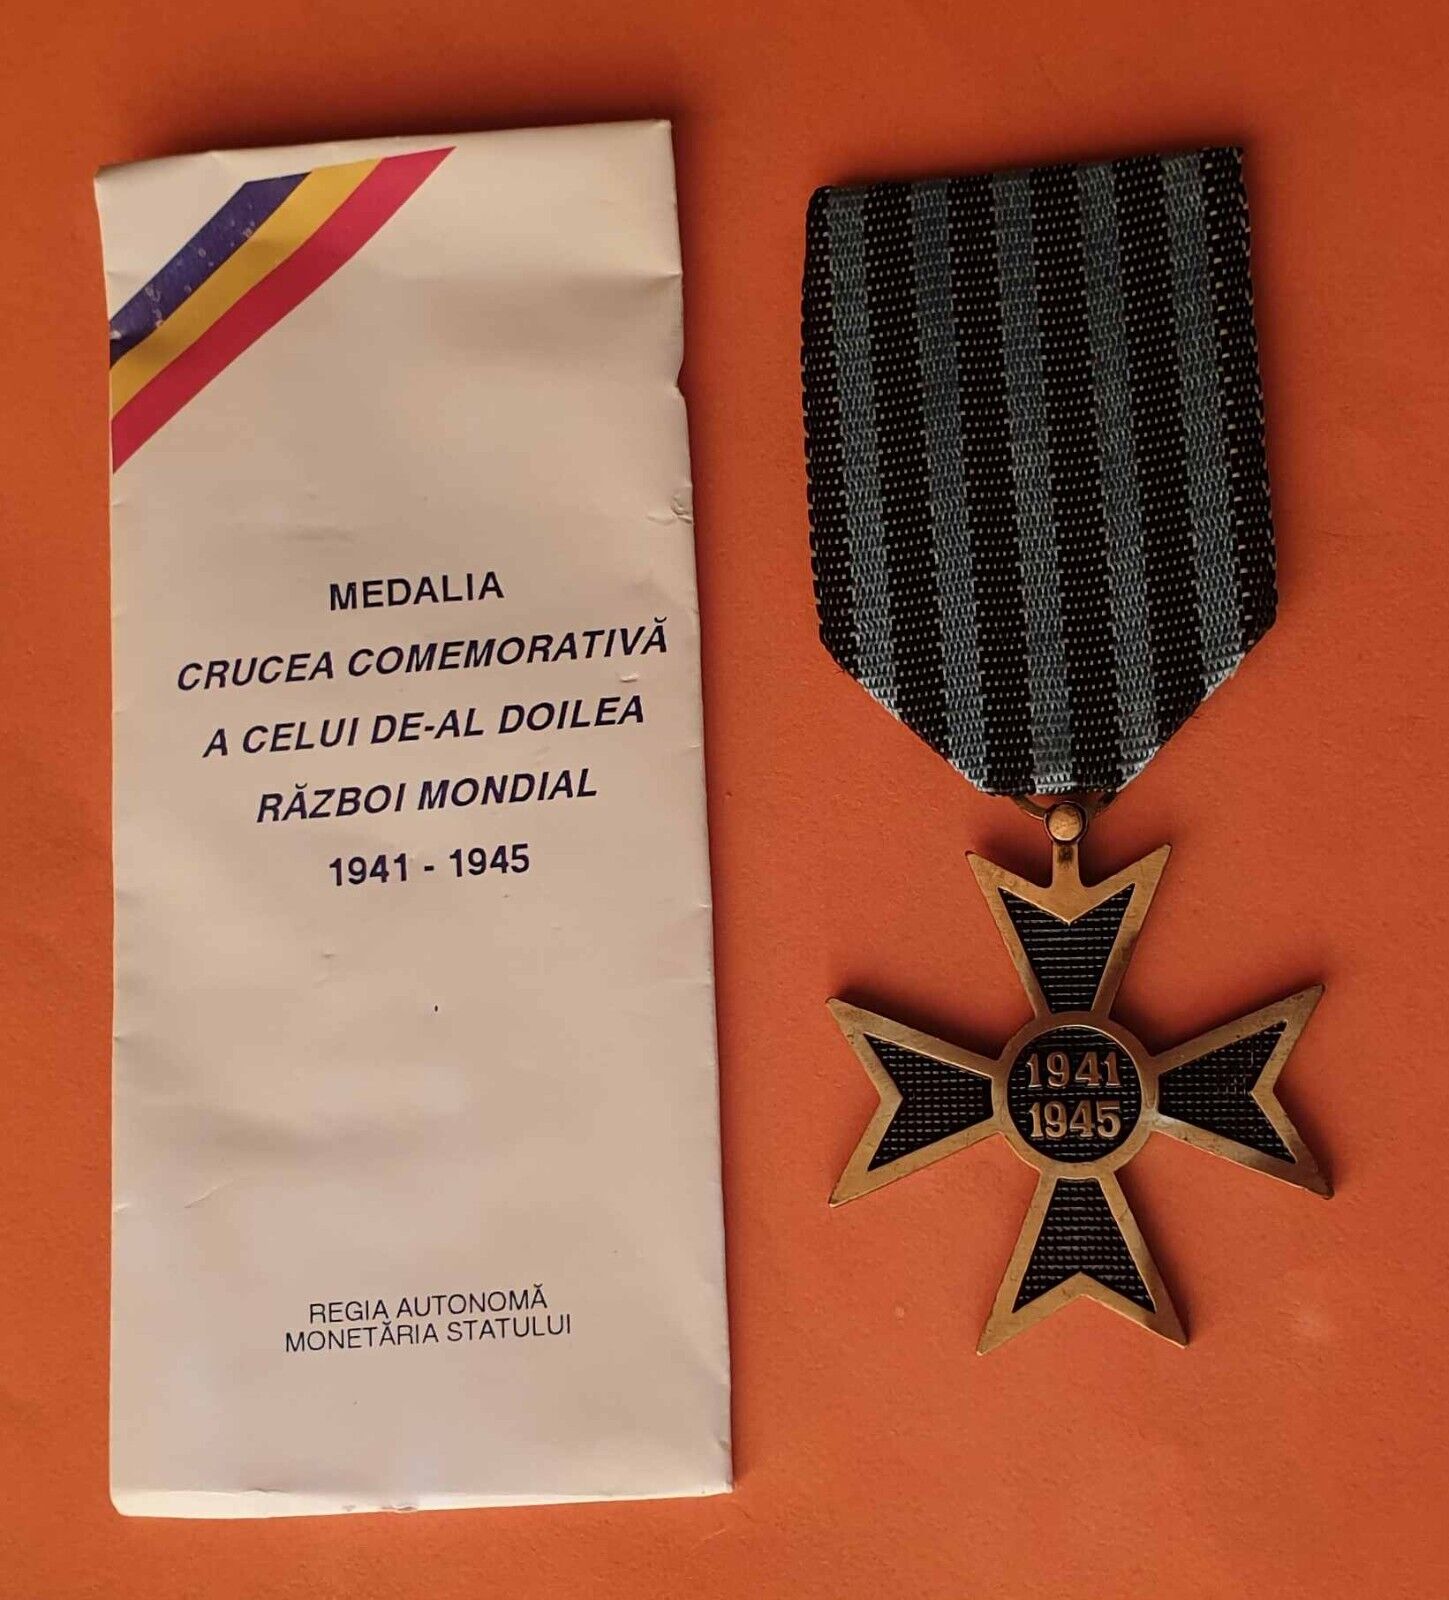 Romania veteran ww2 Commemorative Cross Medal of the Second World War 1941-1945